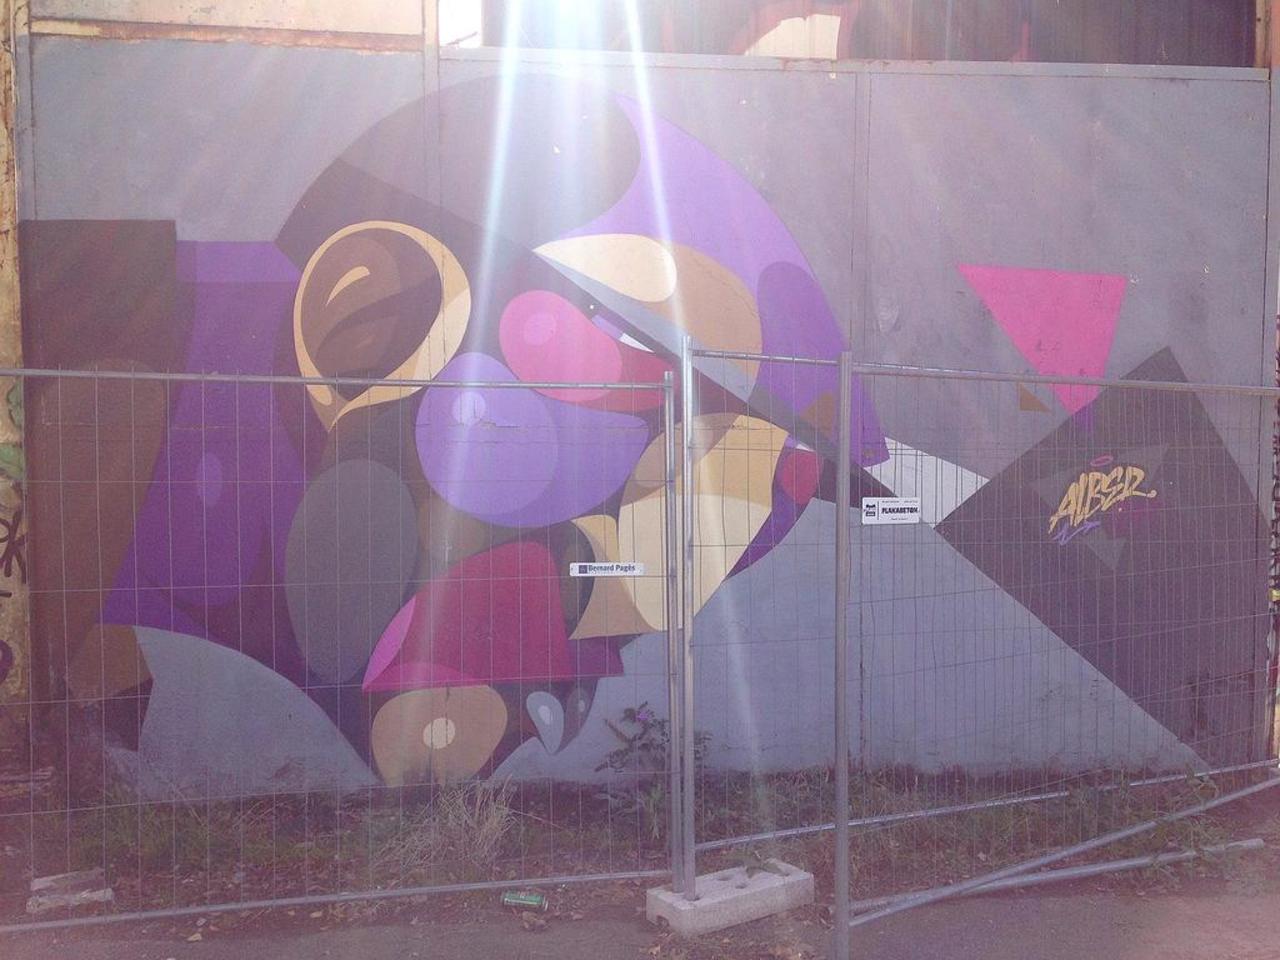 Street Art by Alber in #Bordeaux http://www.urbacolors.com #art #mural #graffiti #streetart https://t.co/3kj68YXXtV